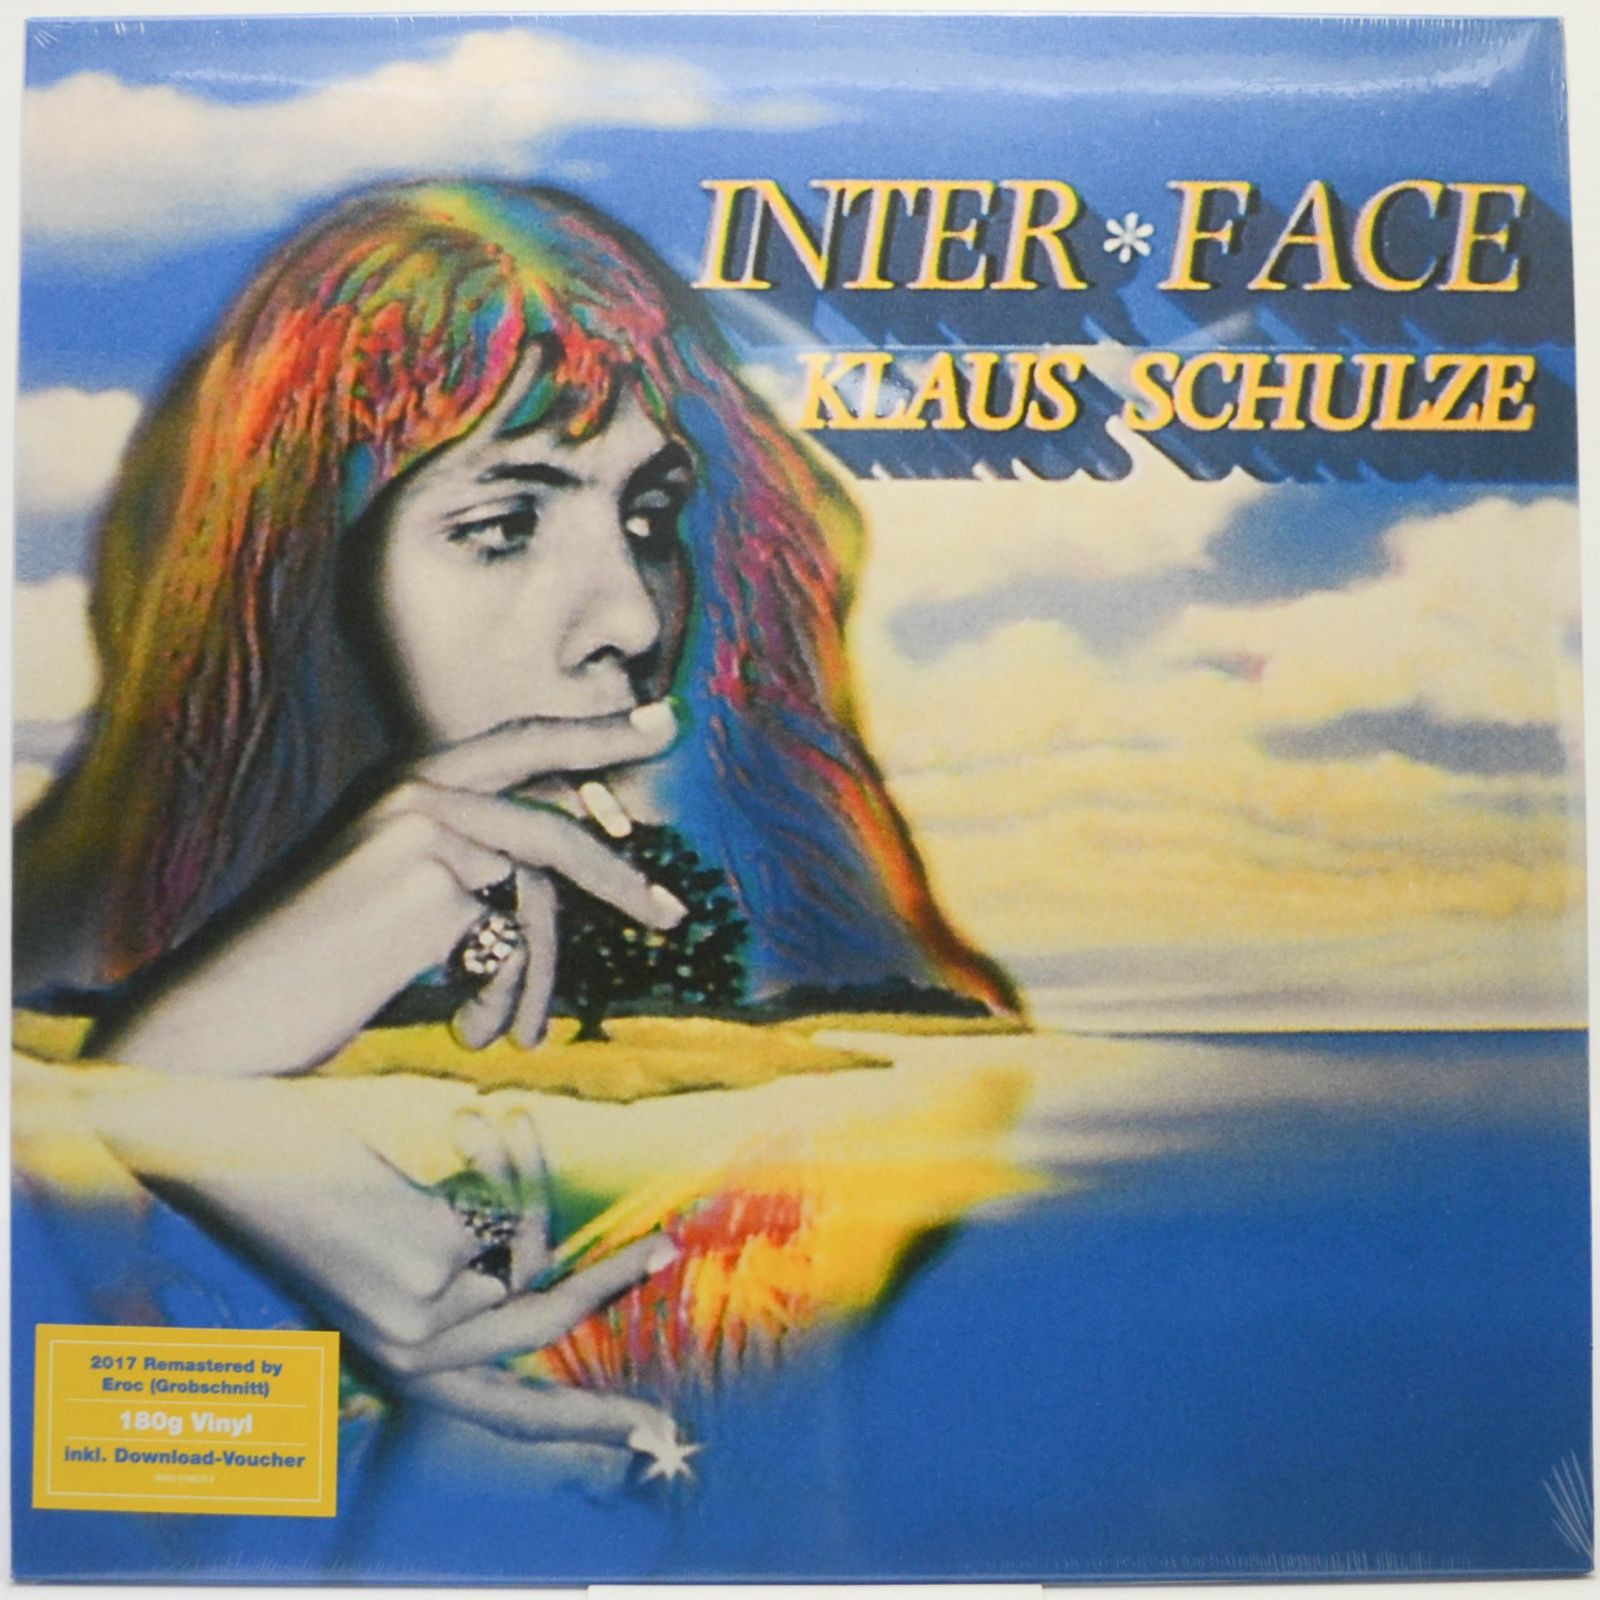 Inter * Face, 1985